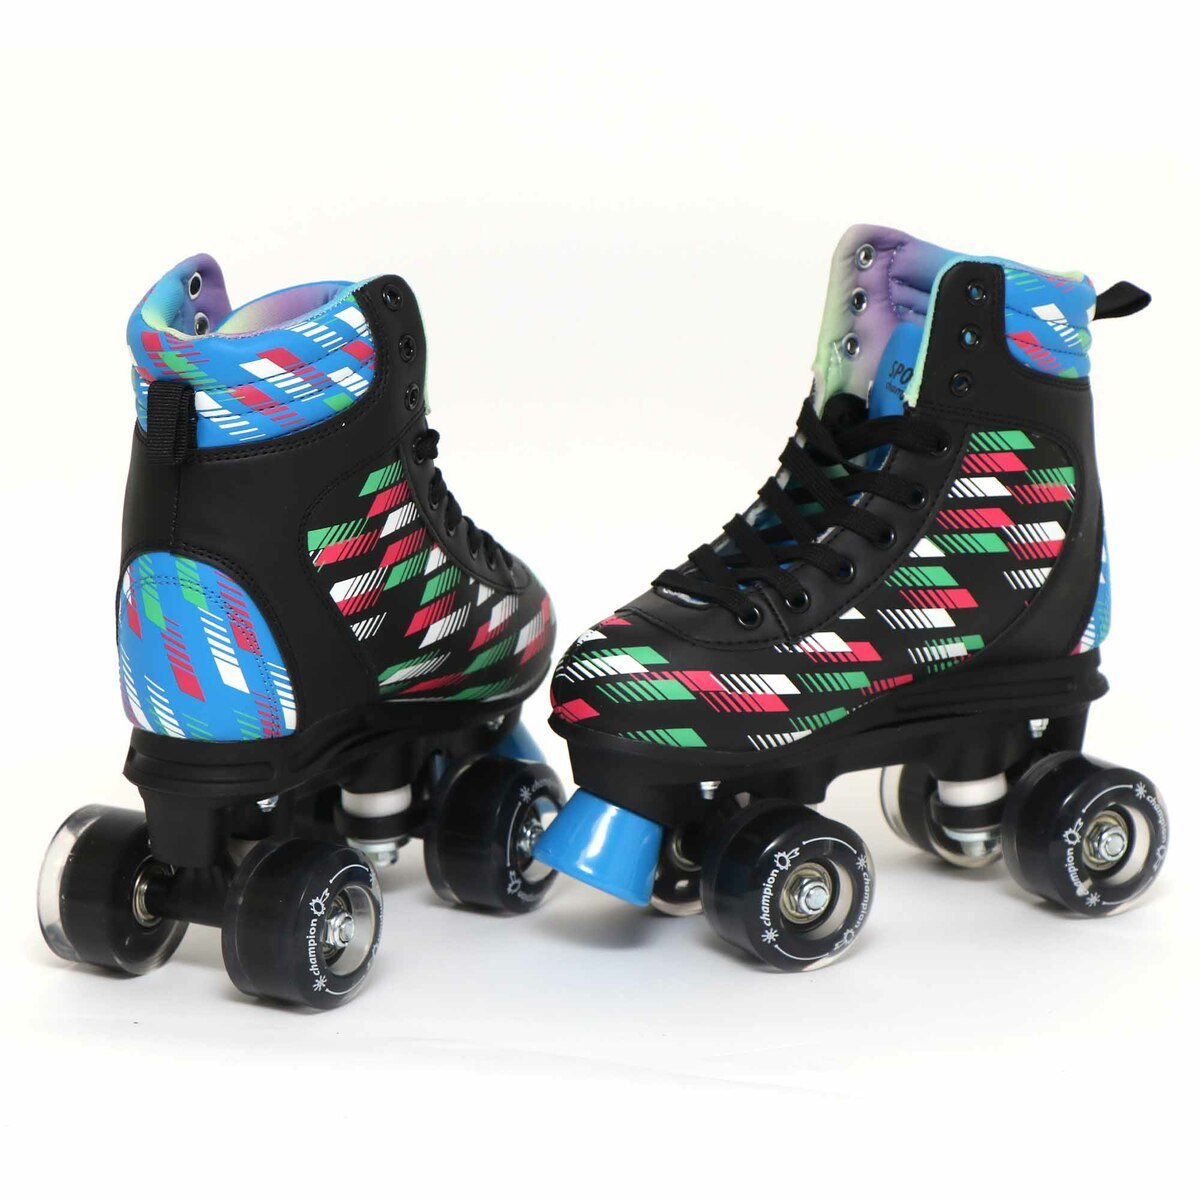 Sports Champion Skating Shoe TEQR004, Size M Assorted Color & Design